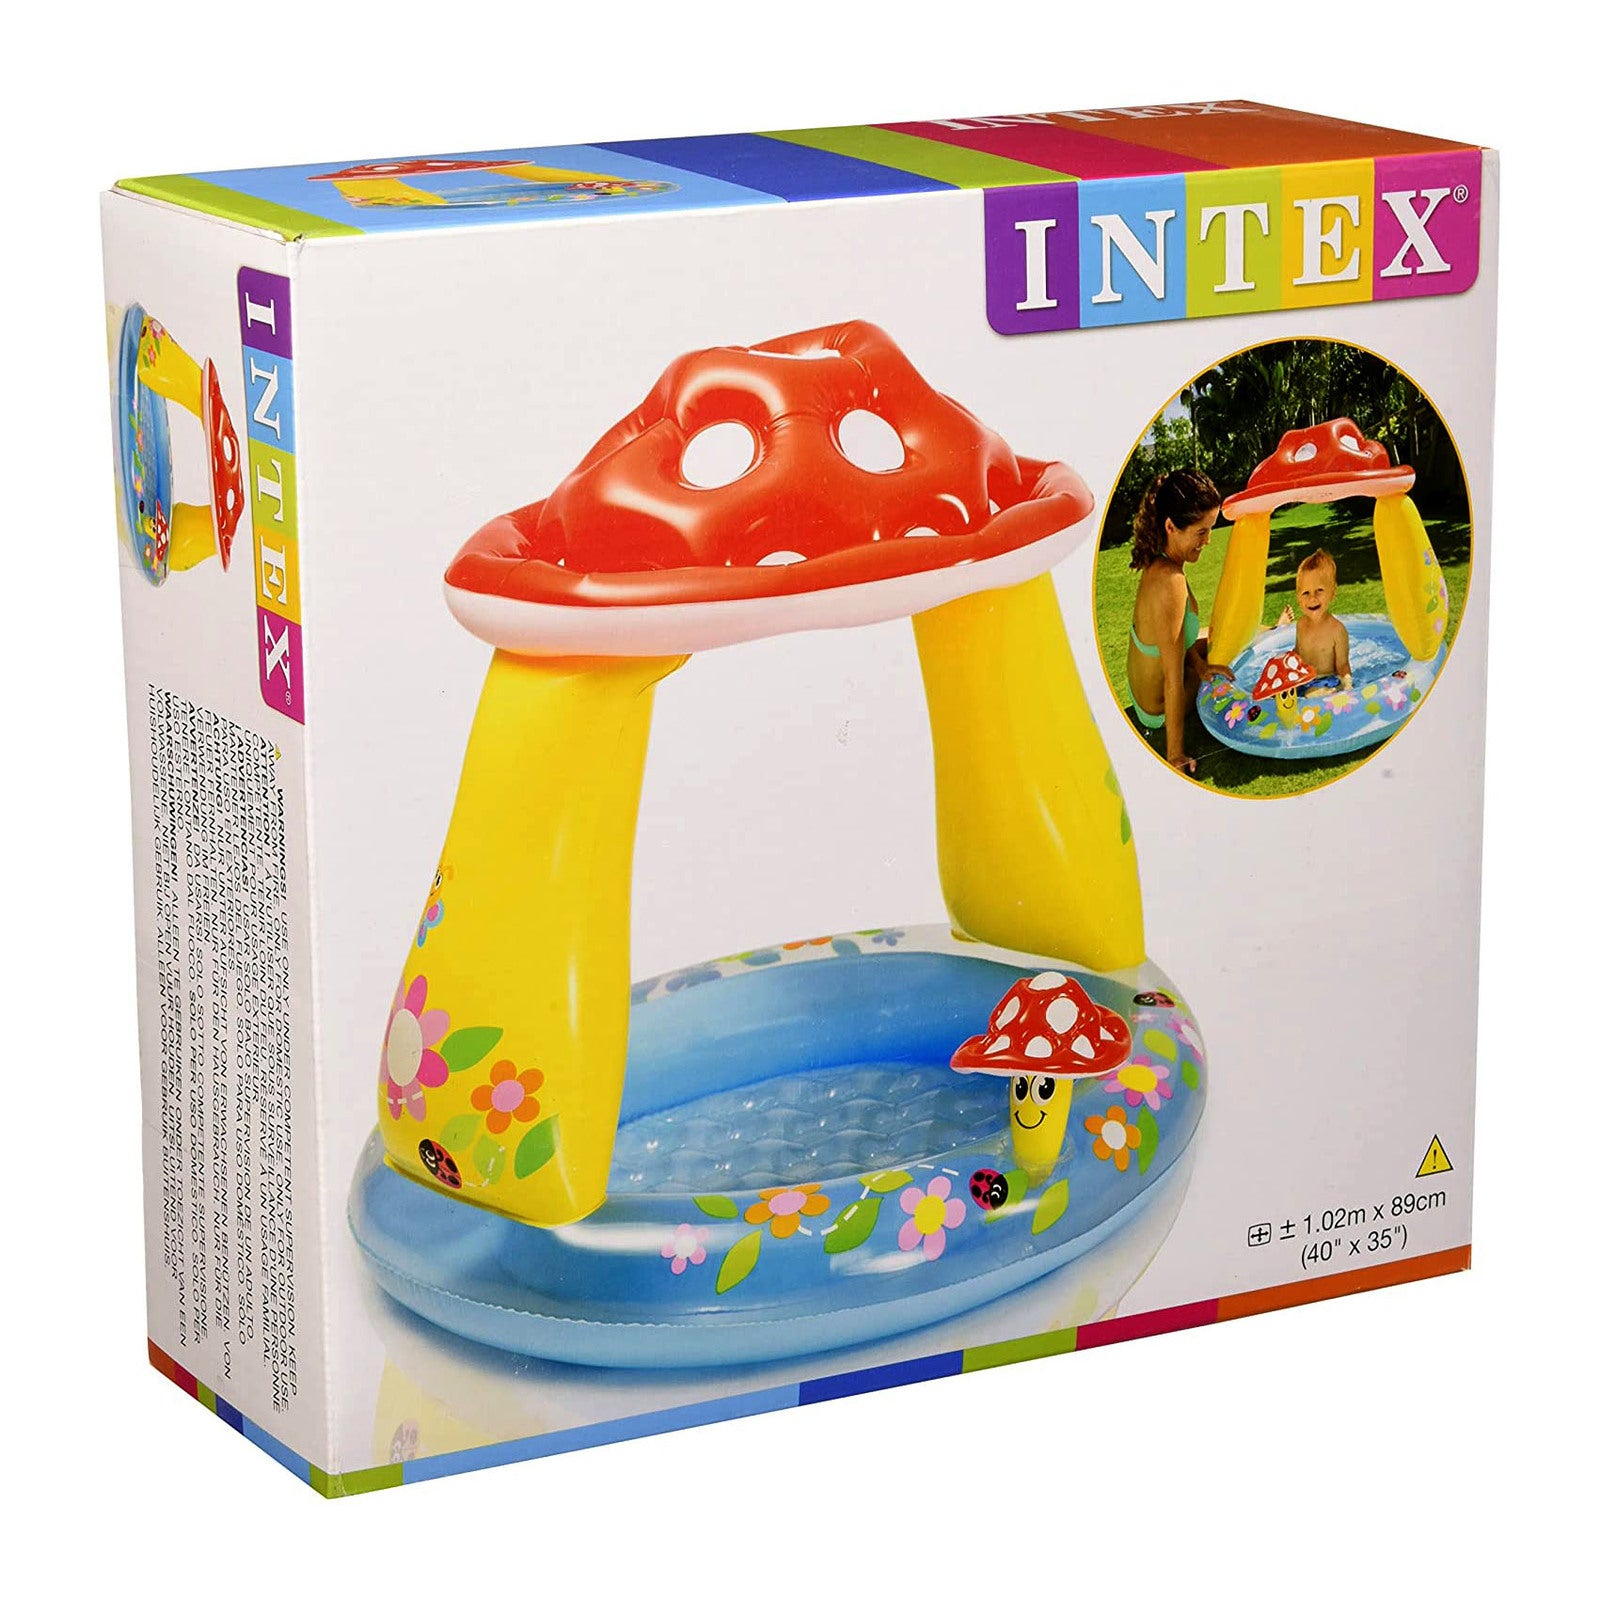 Intex Mushroom Baby Pool